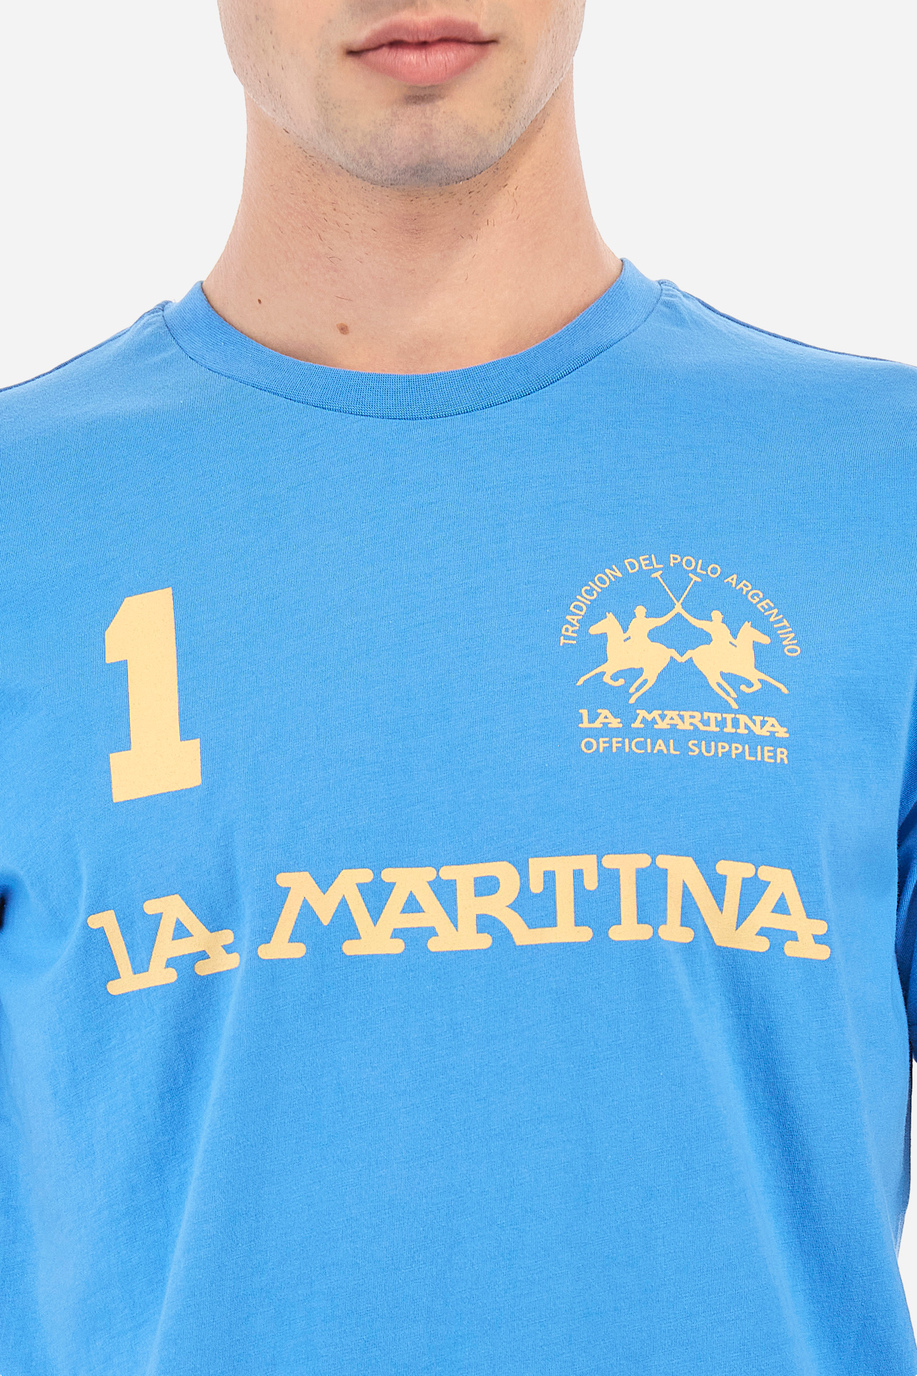 T-shirt da uomo a maniche corte 100% cotone regular fit- Reichard - T-shirt | La Martina - Official Online Shop